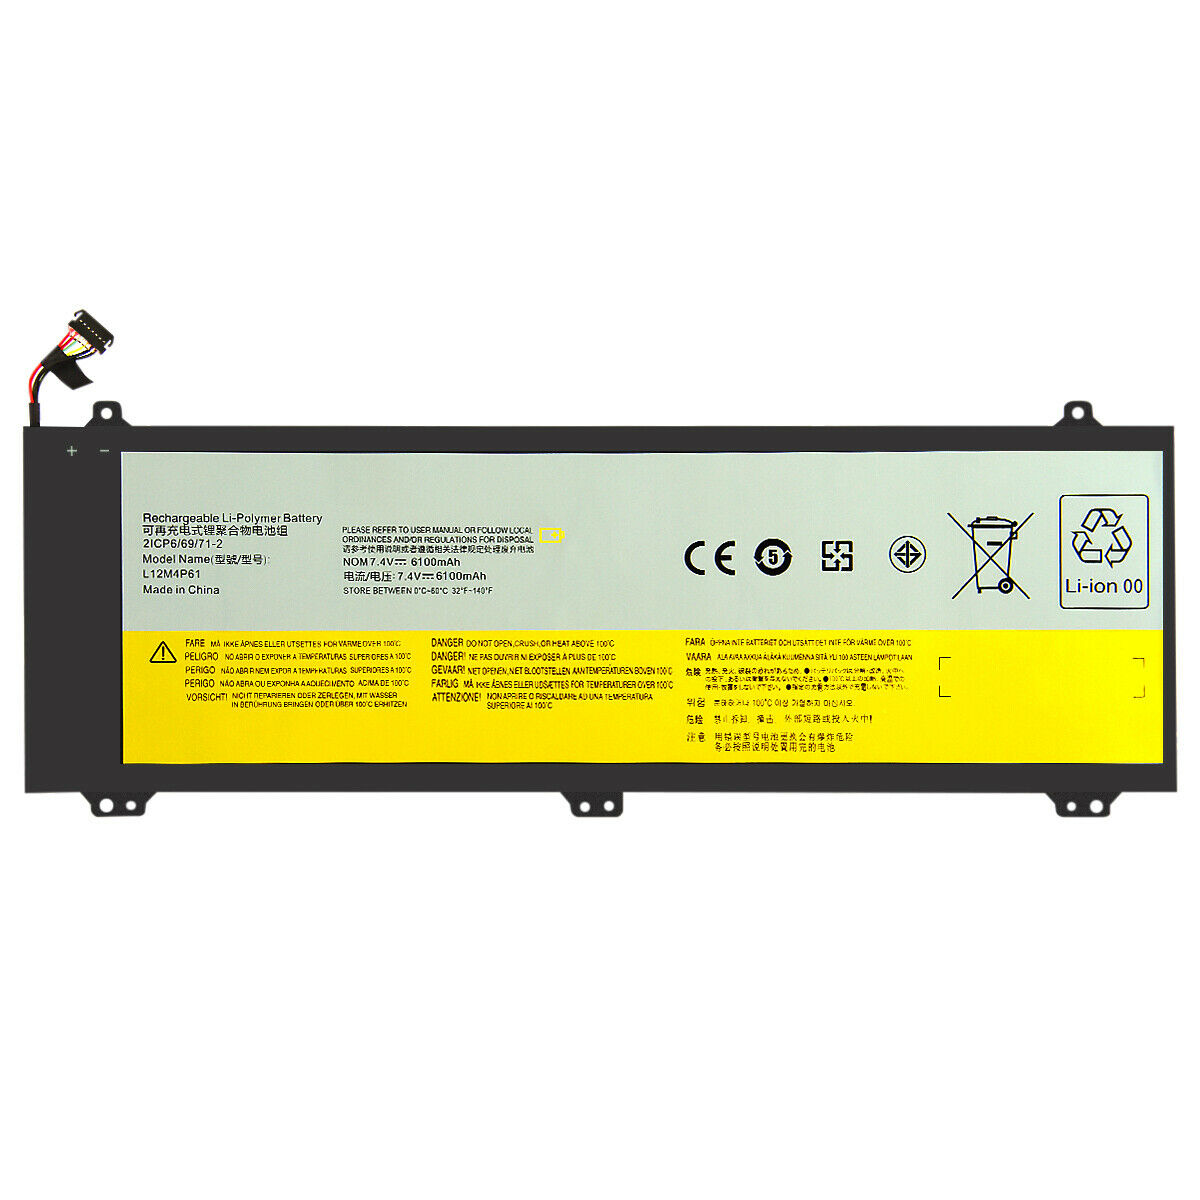 Bateria para Lenovo Ideapad U330p U330t U330 Touch 7.4V L12L4P61 L12L4P63 L12M4P61